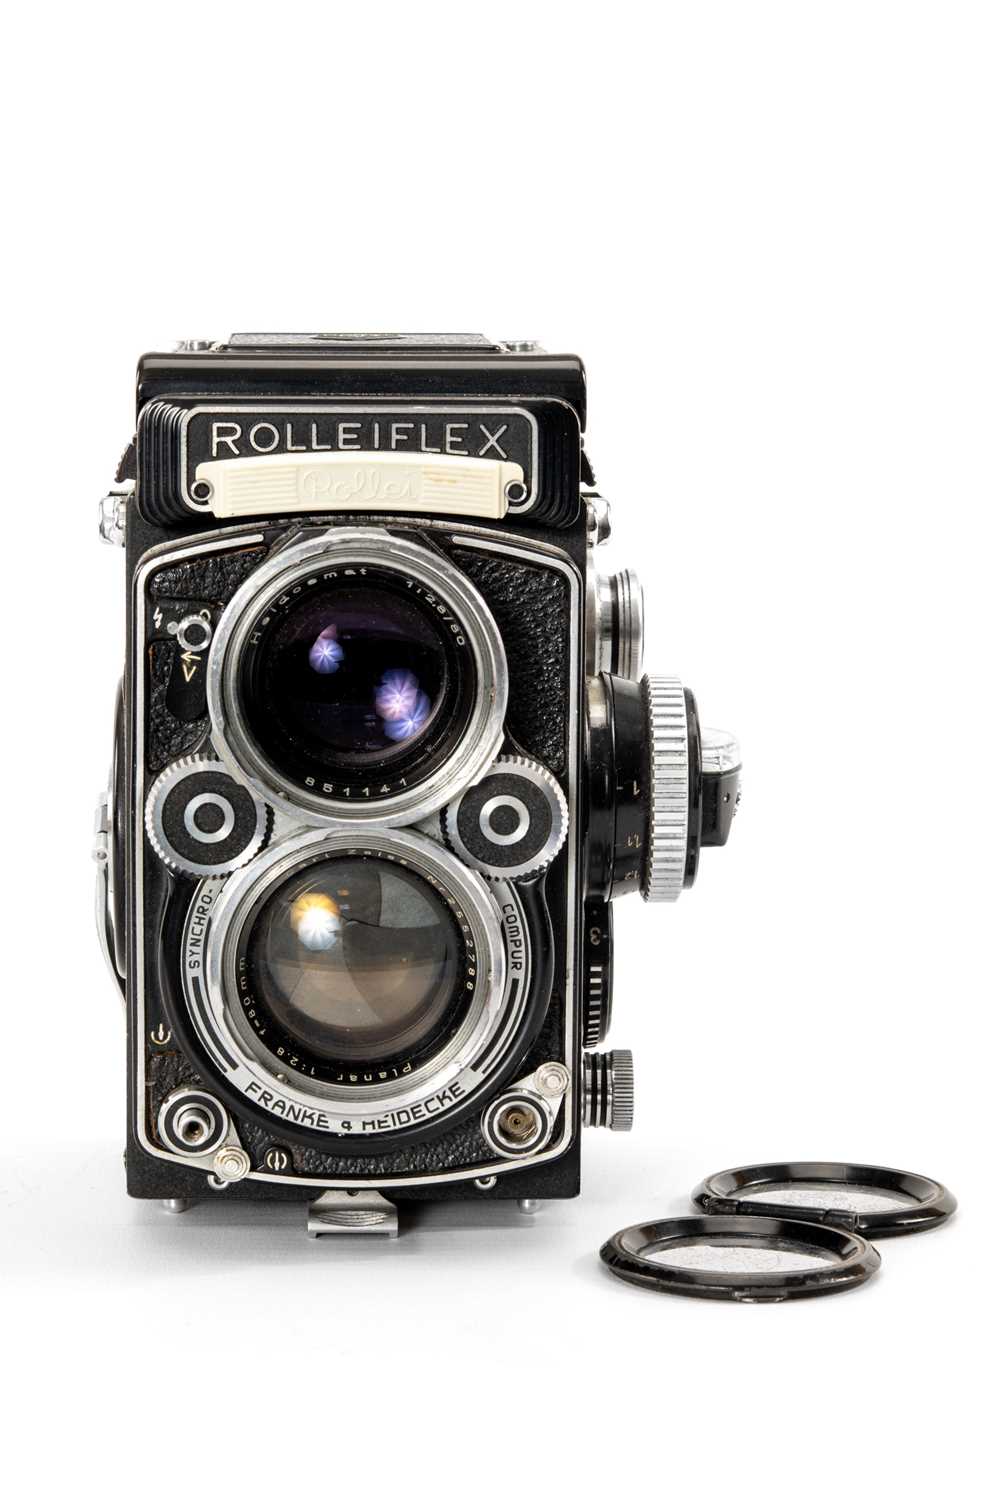 A ROLEI F&H ROLLEIFLEX 2.8F MEDIUM FORMAT CAMERA - black, serial no. 2400583, with a Carl Zeiss,